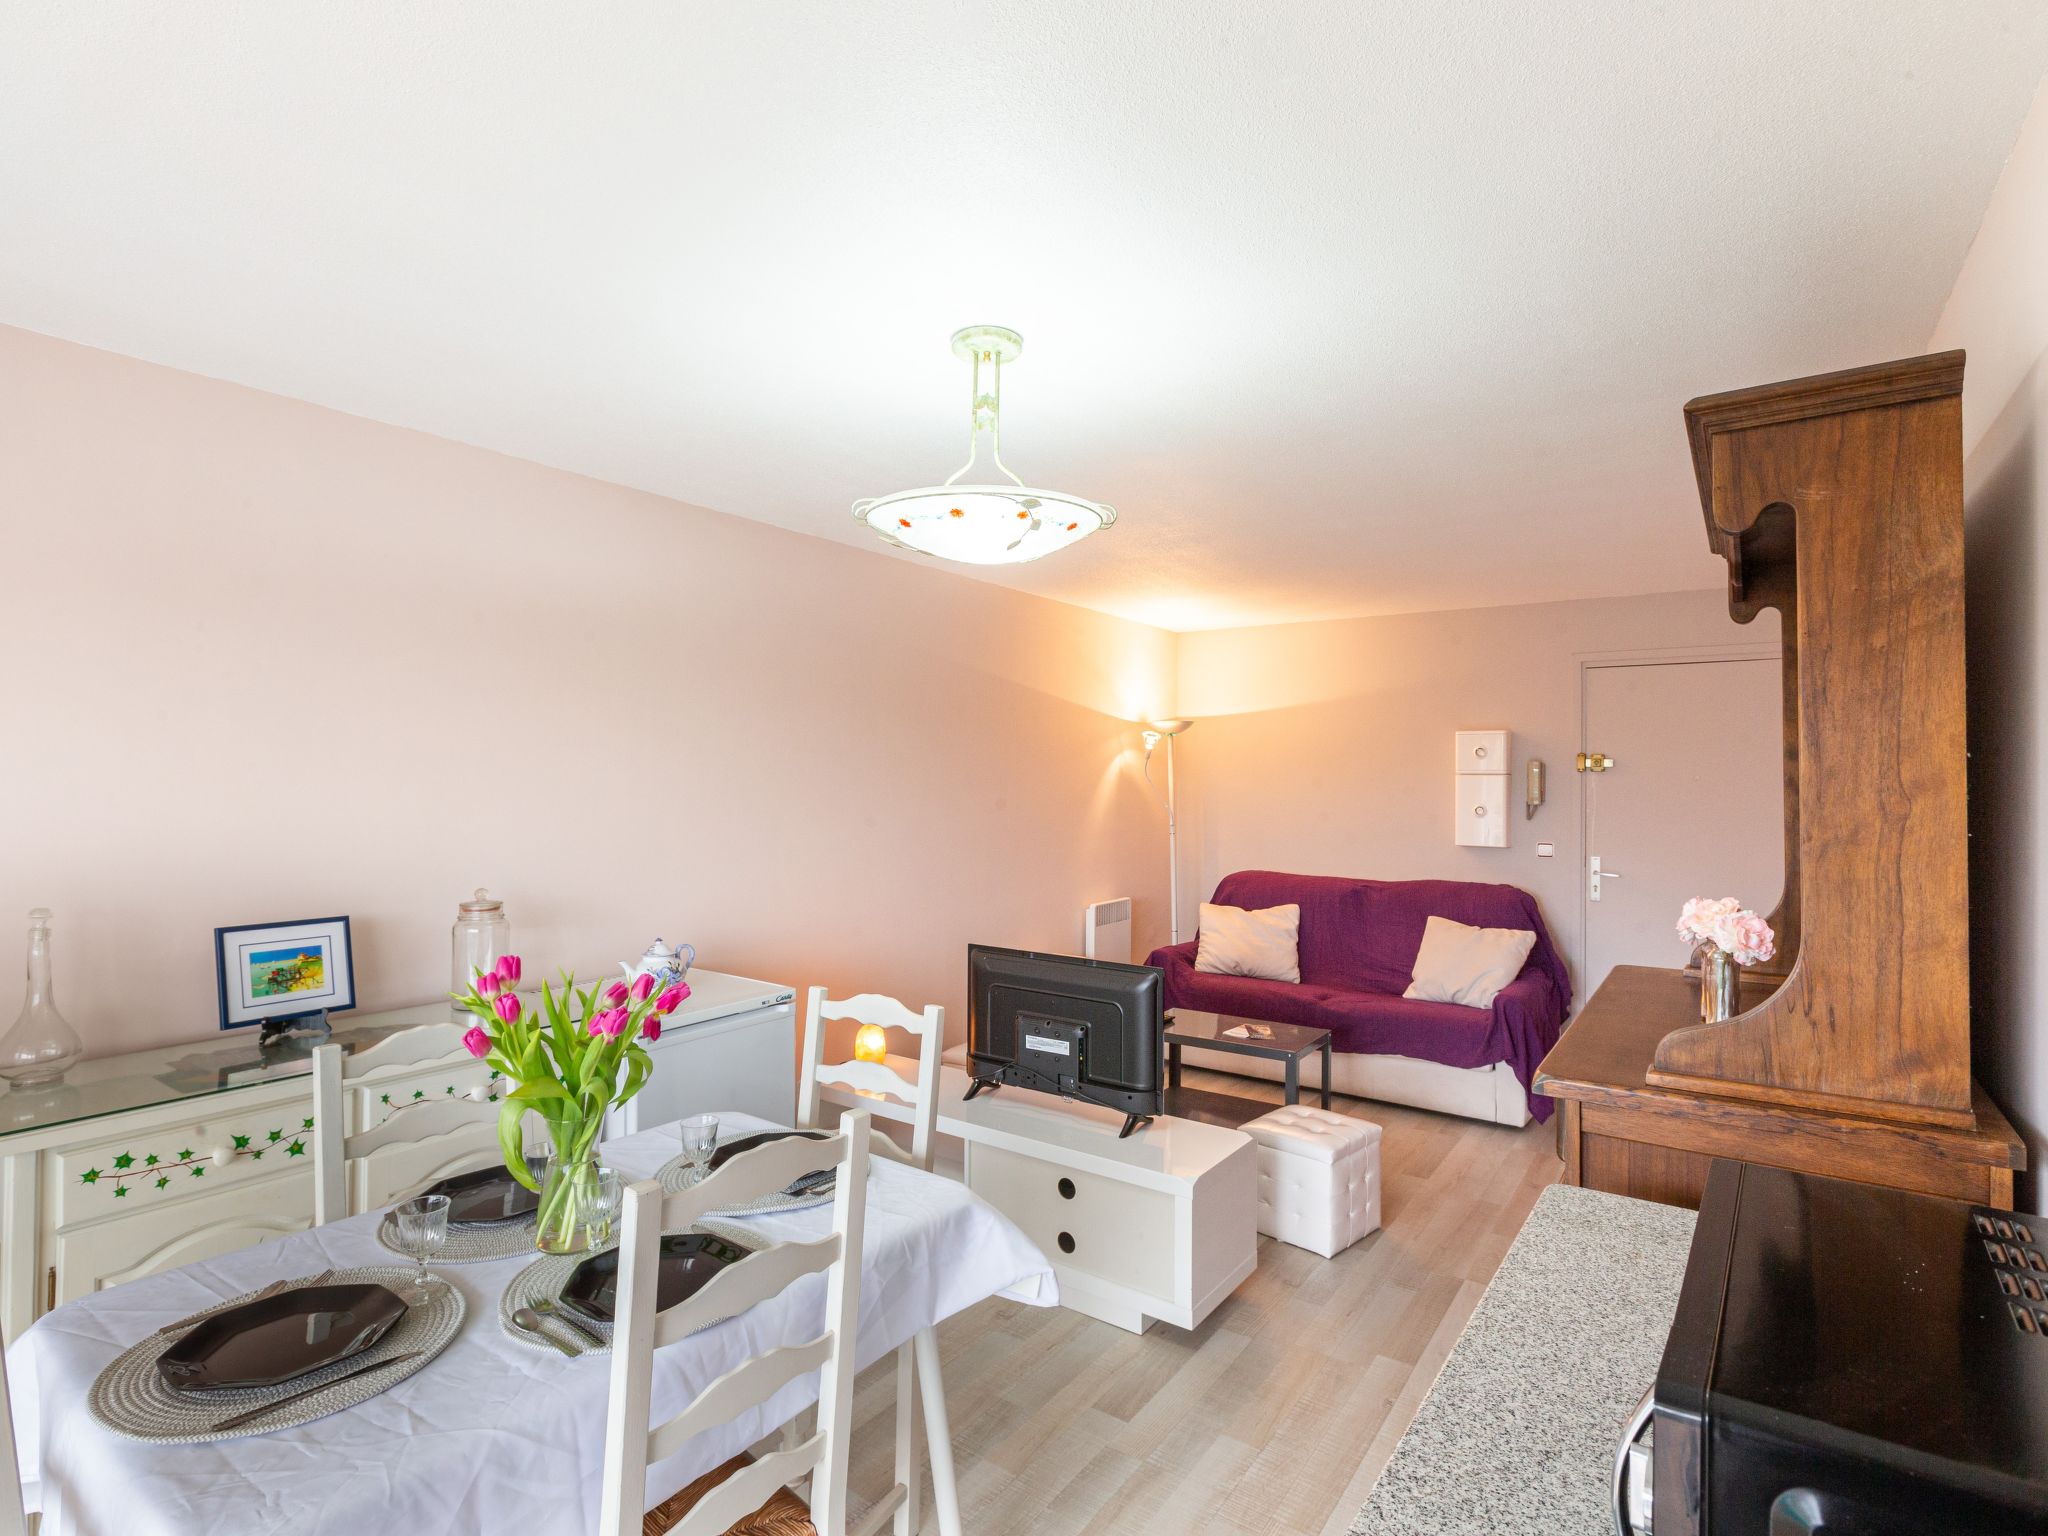 Photo 2 - Appartement de 1 chambre à Meschers-sur-Gironde